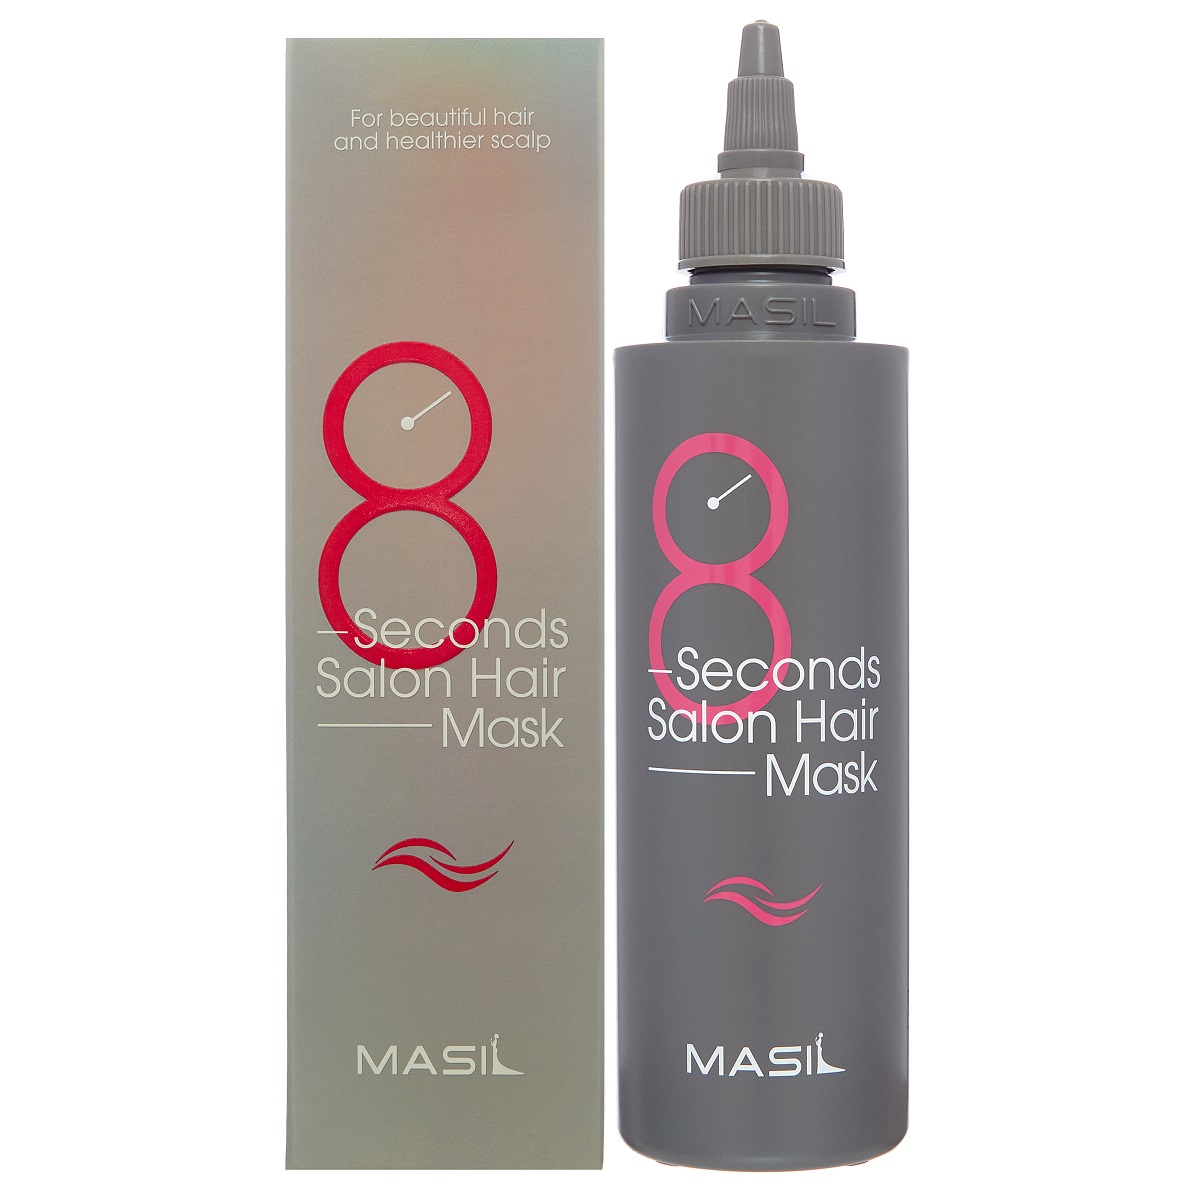 Masil Маска для быстрого восстановления волос 8 Seconds Salon Hair Mask, 200 мл (Masil, ) цена и фото